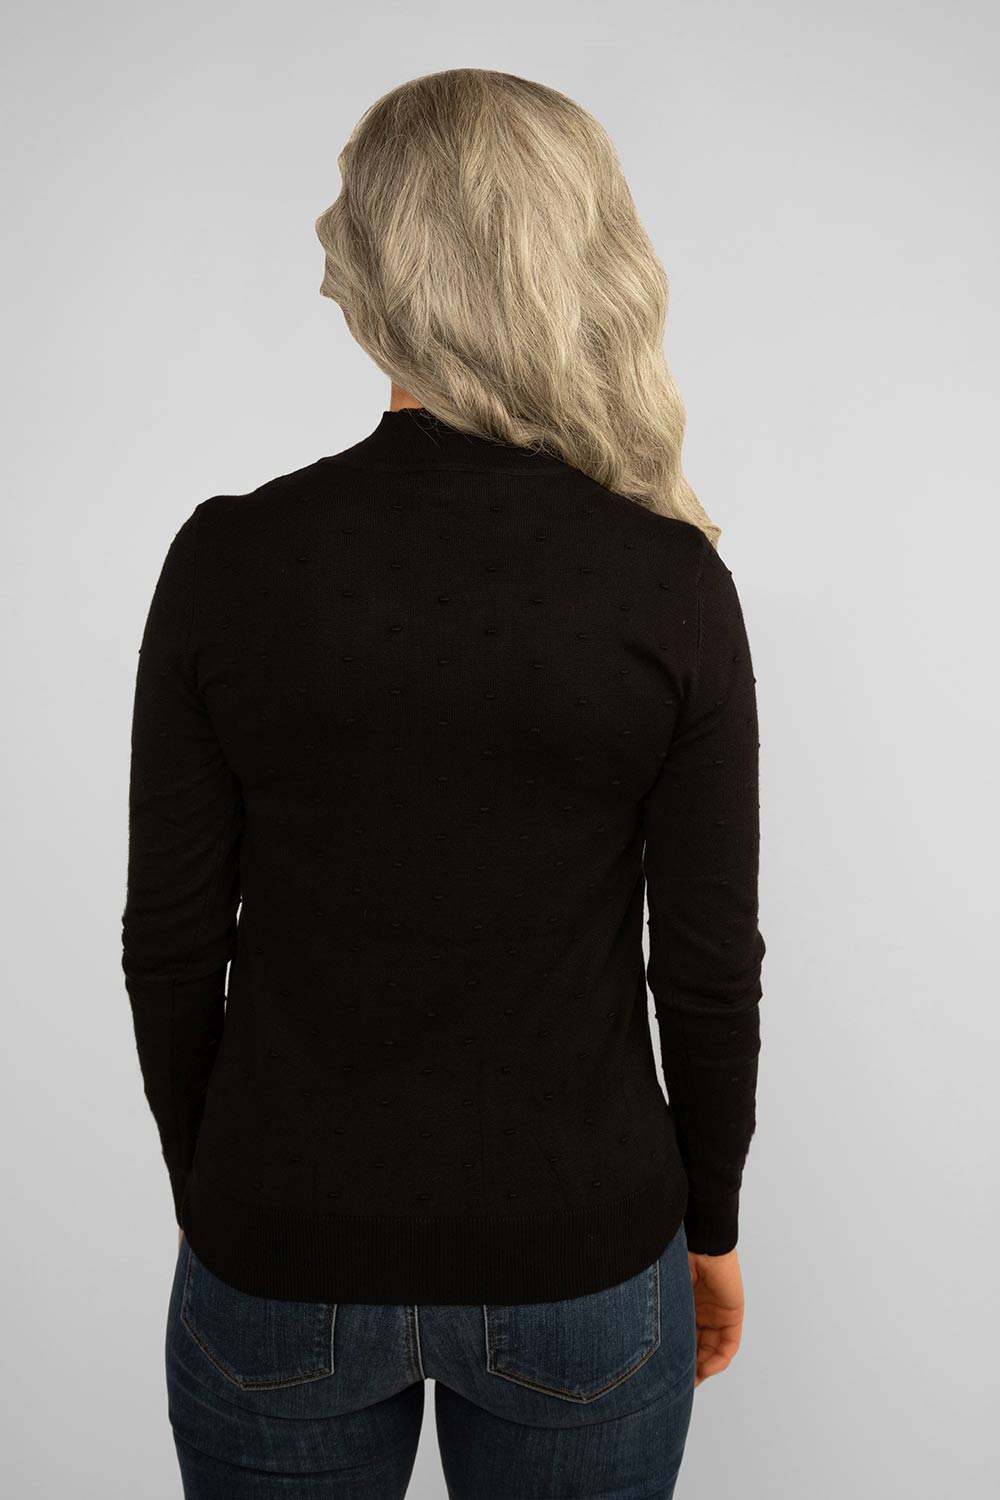 Women's Clothing CARRE NOIR (6603)  Lightweight Polka Dot Sweater in BLACK